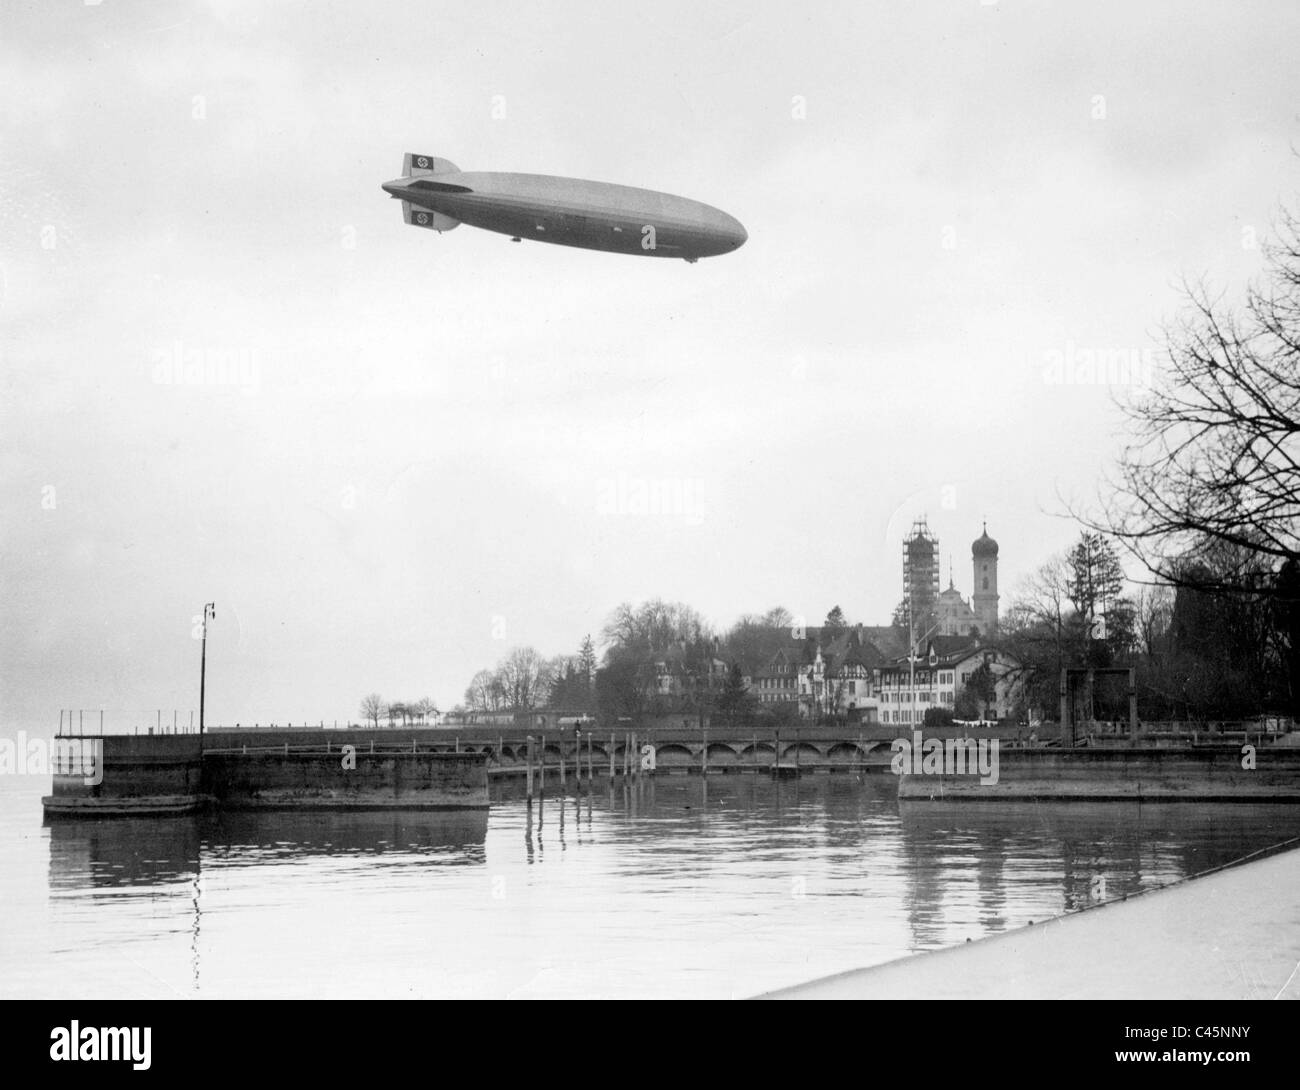 "Zeppelin Hindenburg' (LZ 129) al di sopra di Friedrichshafen, 1936 Foto Stock